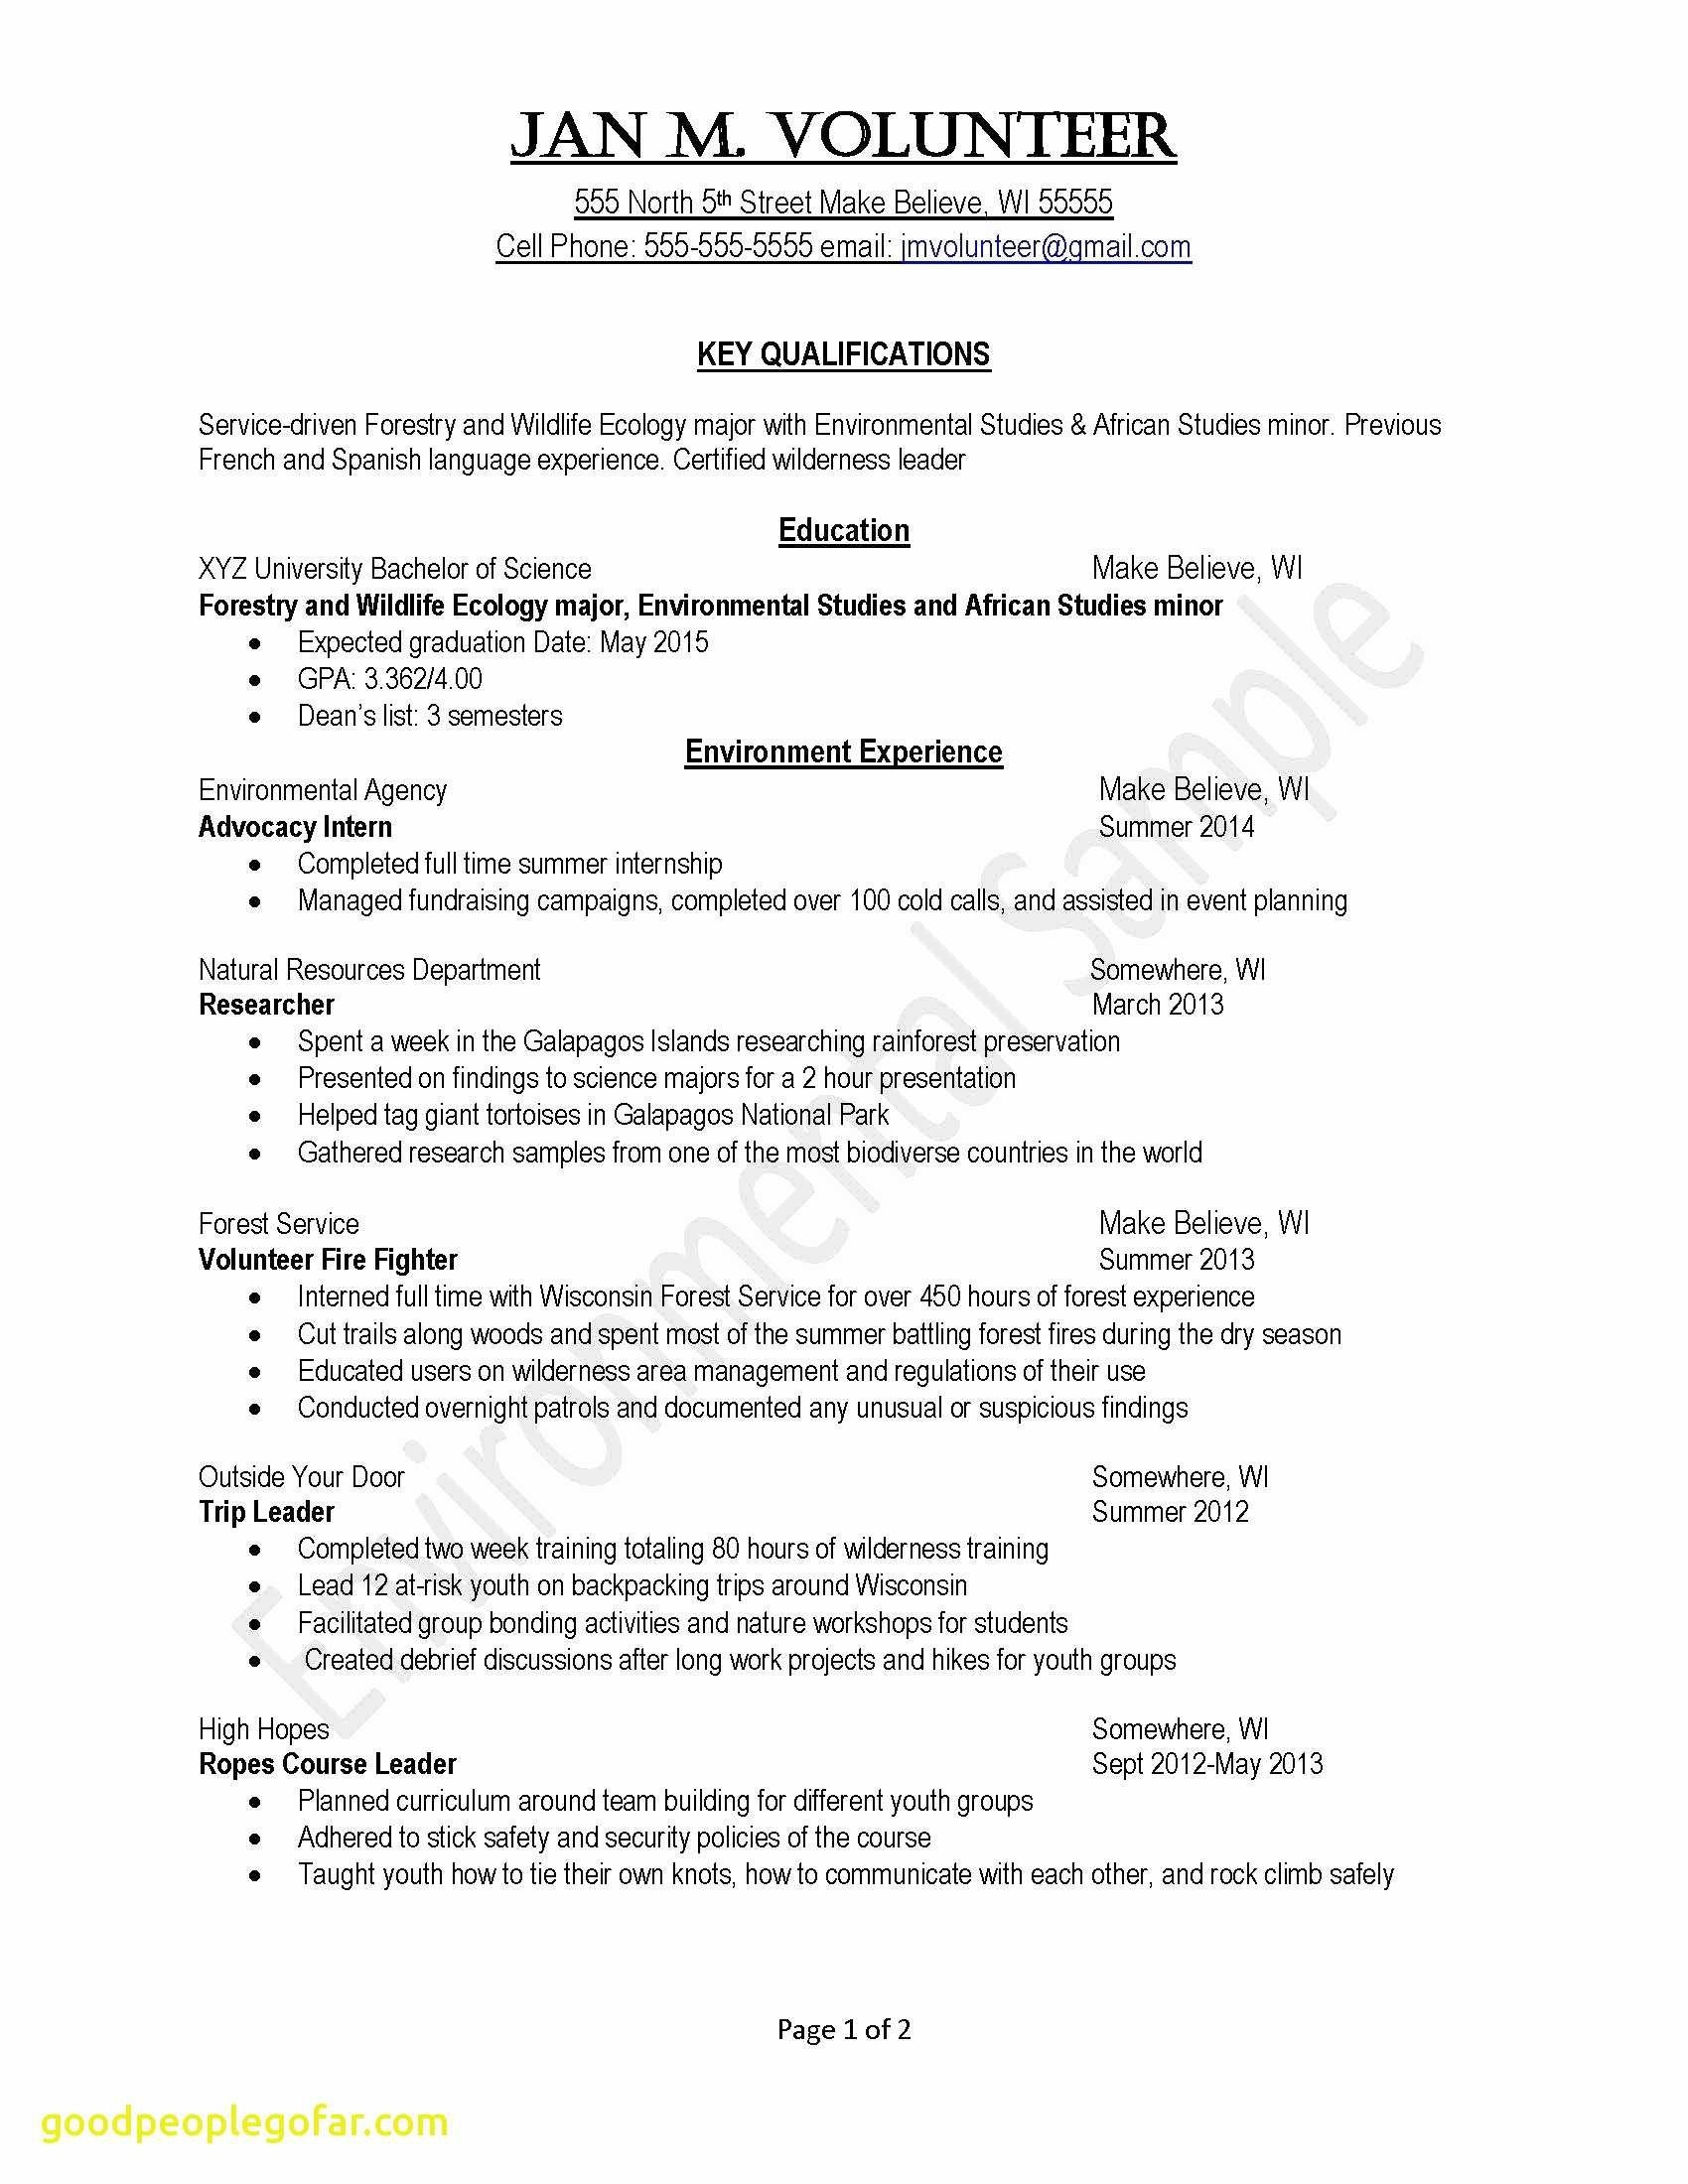 Resume For High School Student High School Student Resume Objective Adorable Nursing Resume Objective Examples Lovely Elegant Good Nursing Resume Gallery resume for high school student|wikiresume.com